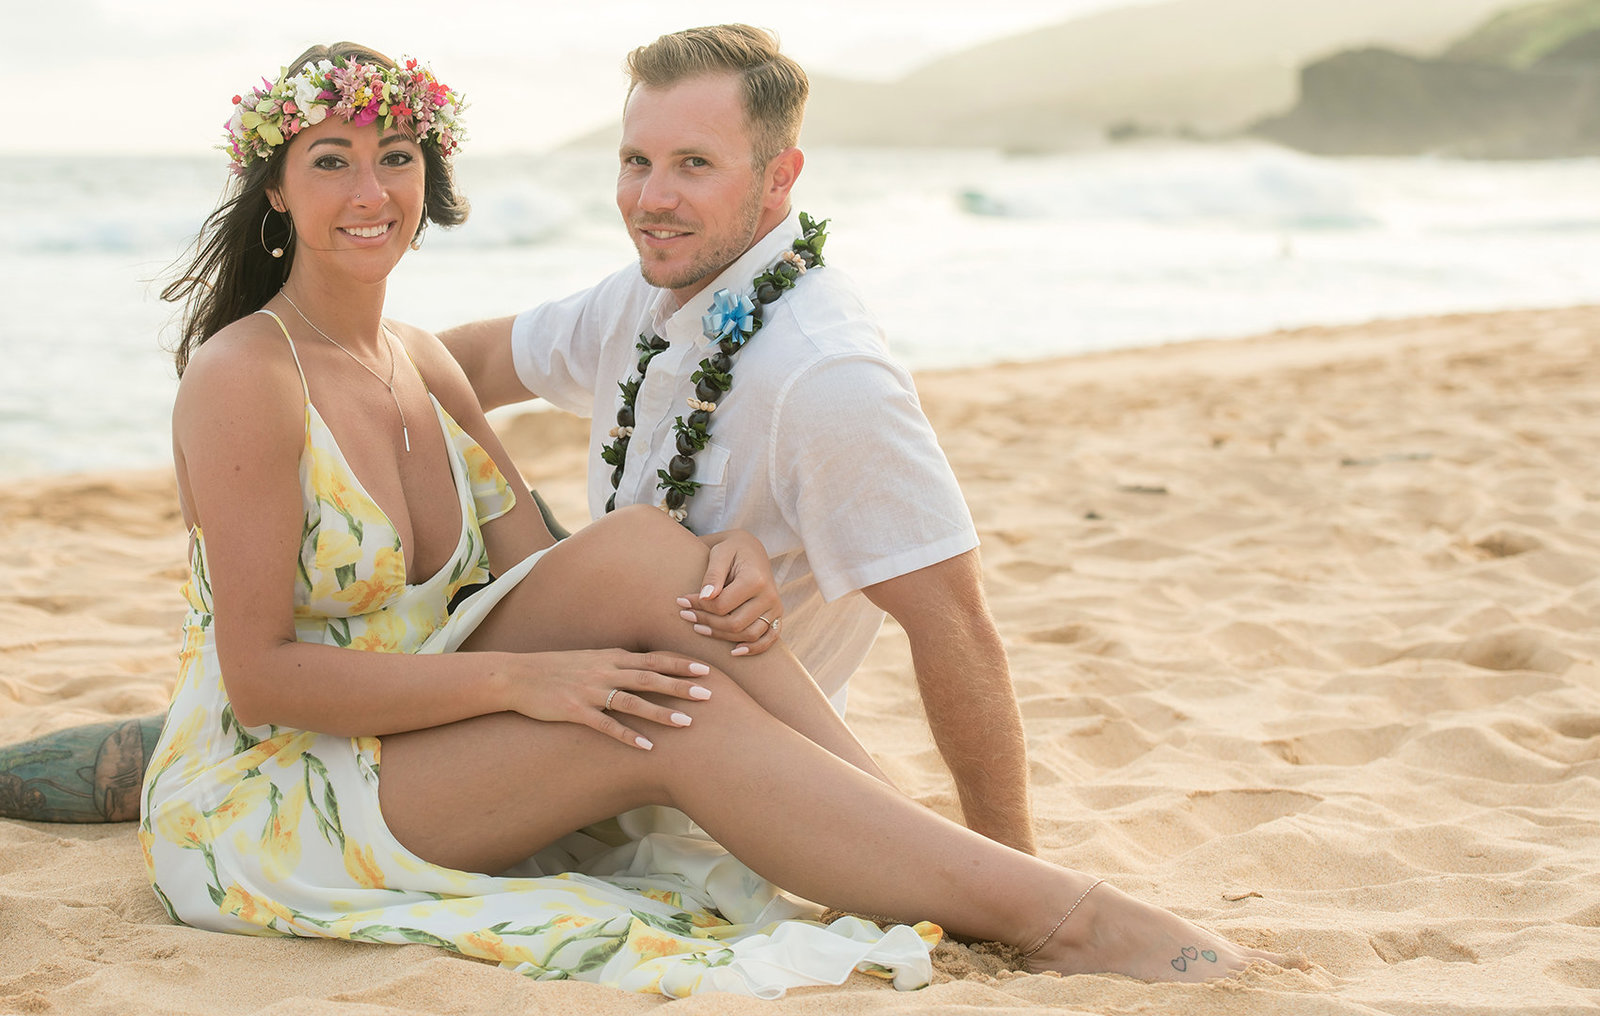 Hawaii affordable photographers | Best Maui photographers | Best Oahu Photographers | Best Kauai Photographers  | Best Big Island Photographers | Best Waikiki Photographers